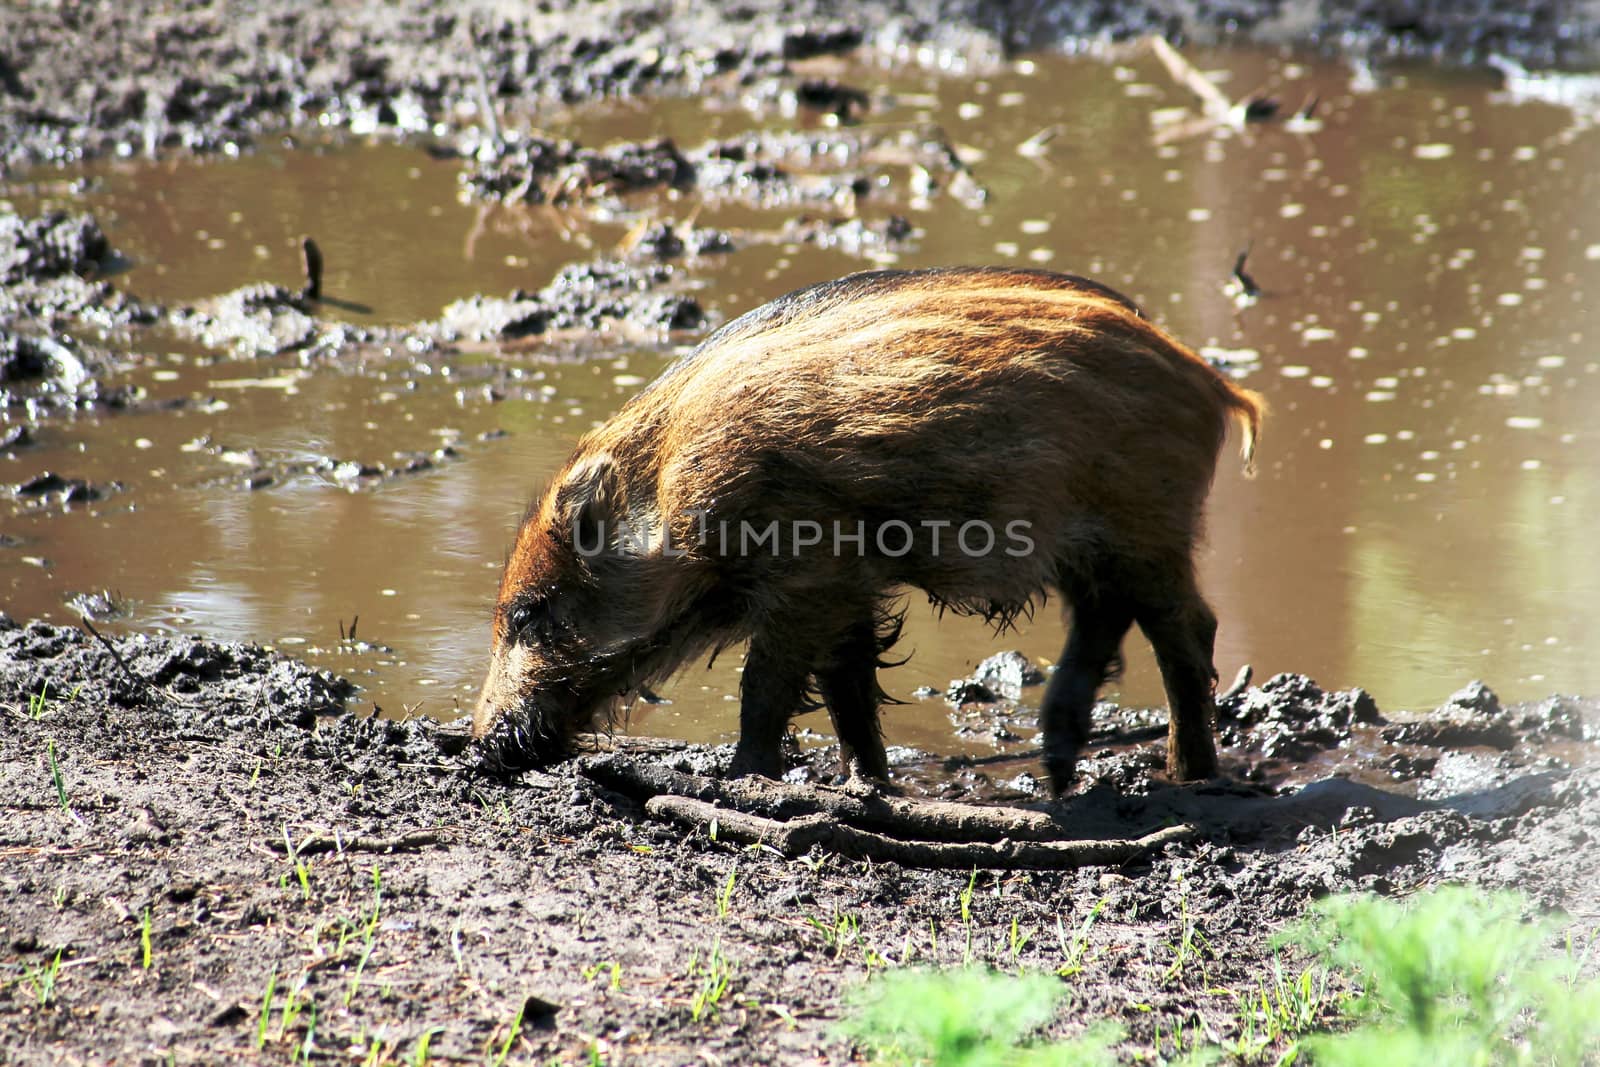 Pig of a wild boar by Vadimdem